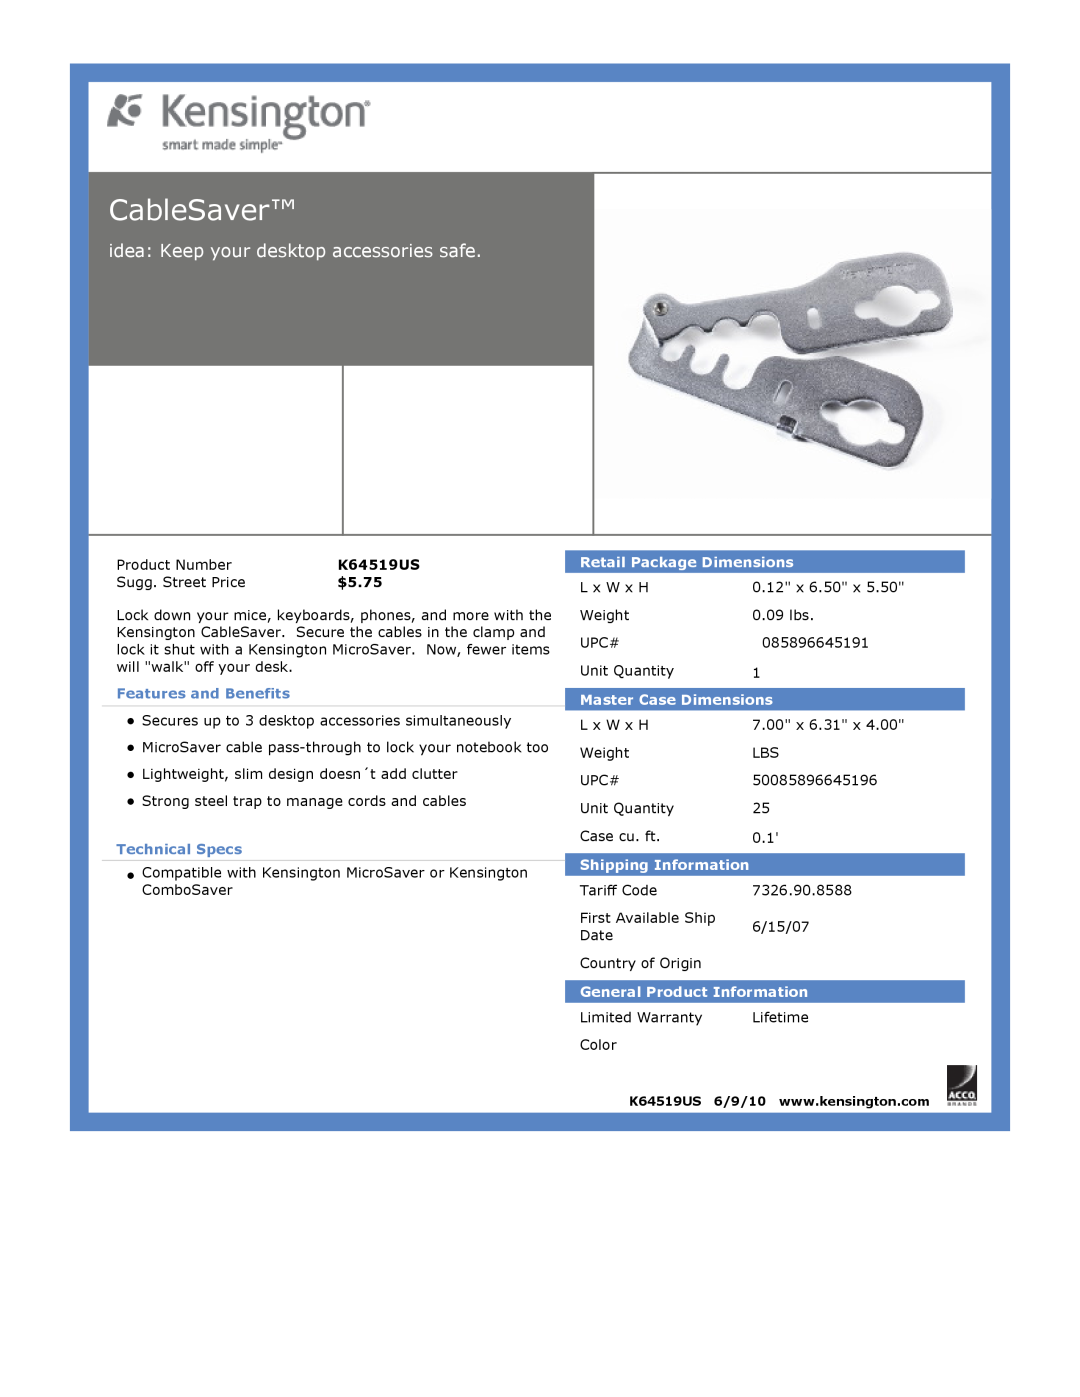 Kensington EU64325 CableSaver, idea: Keep your desktop accessories safe, $5.75, Features and Benefits, Technical Specs 